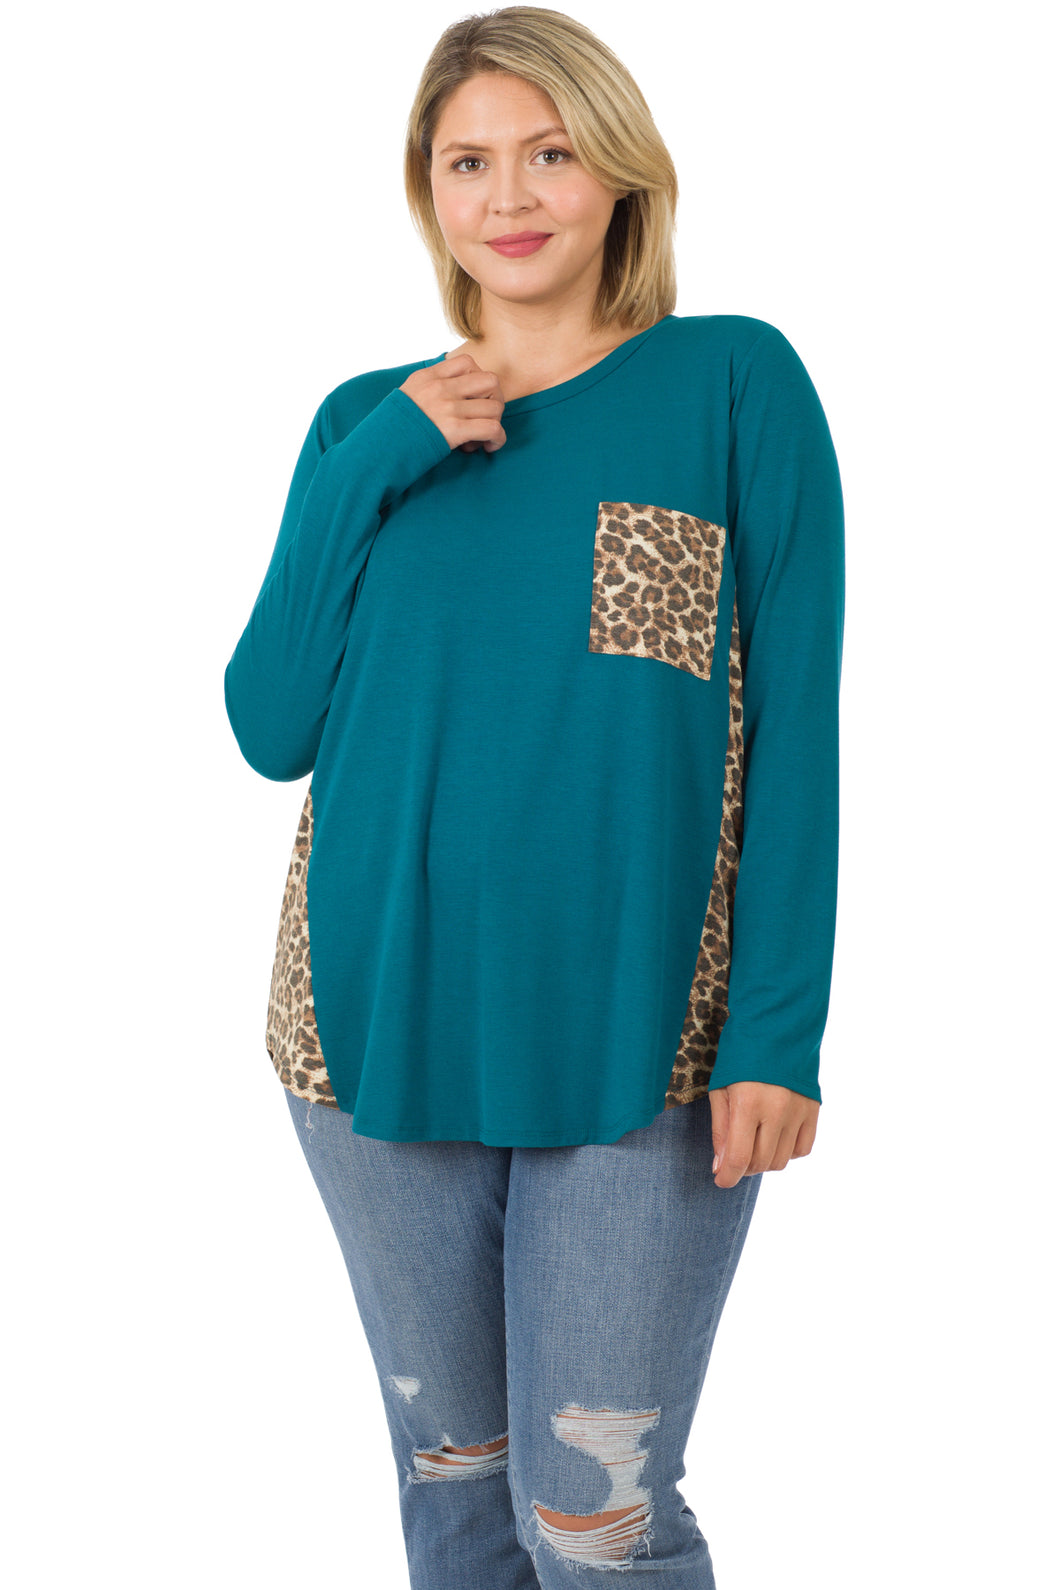 Long Sleeve Leopard Shirt Teal Size M